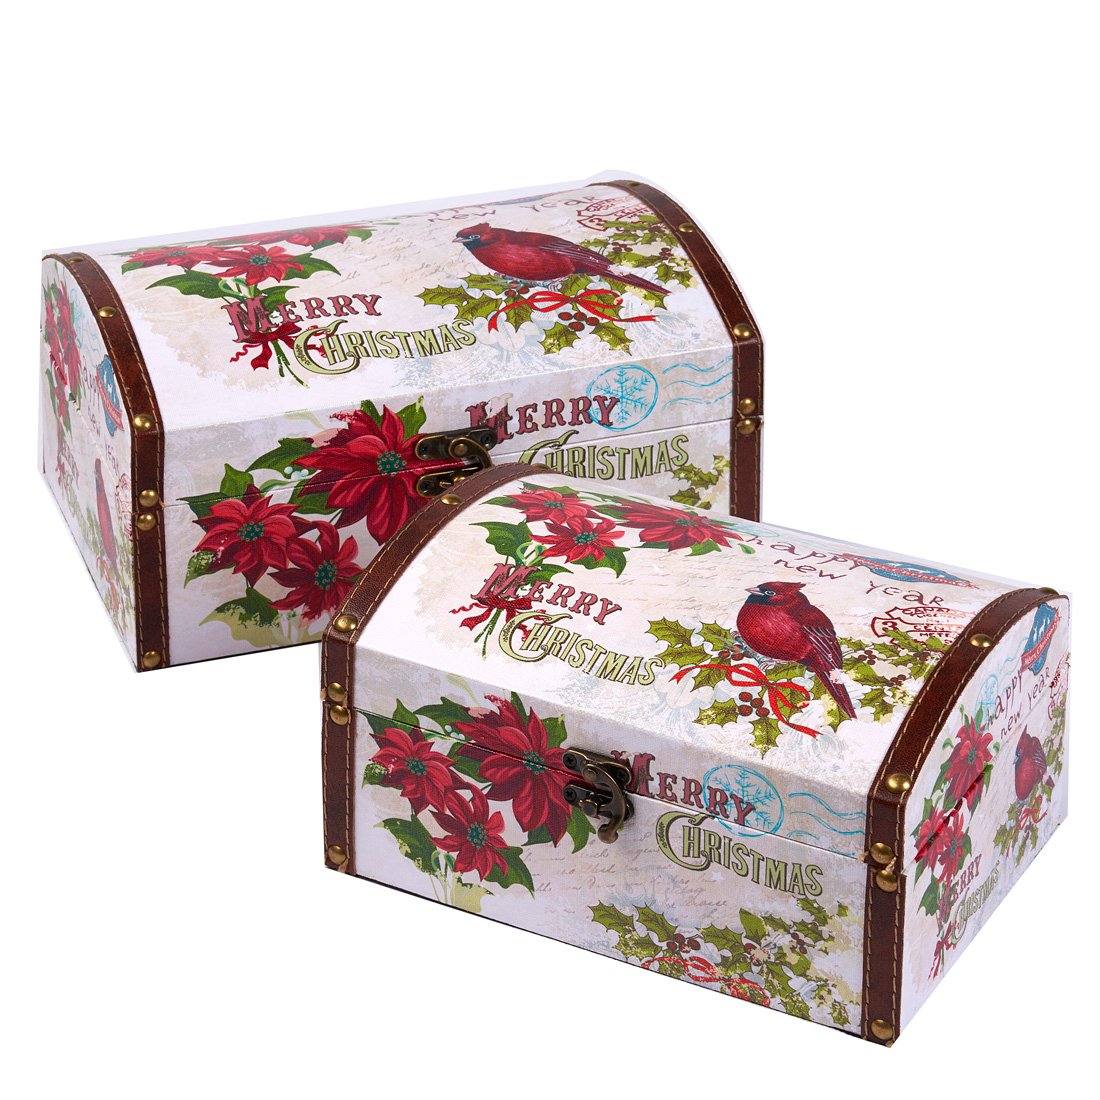 Wholesale Christmas Boxes SJ16104